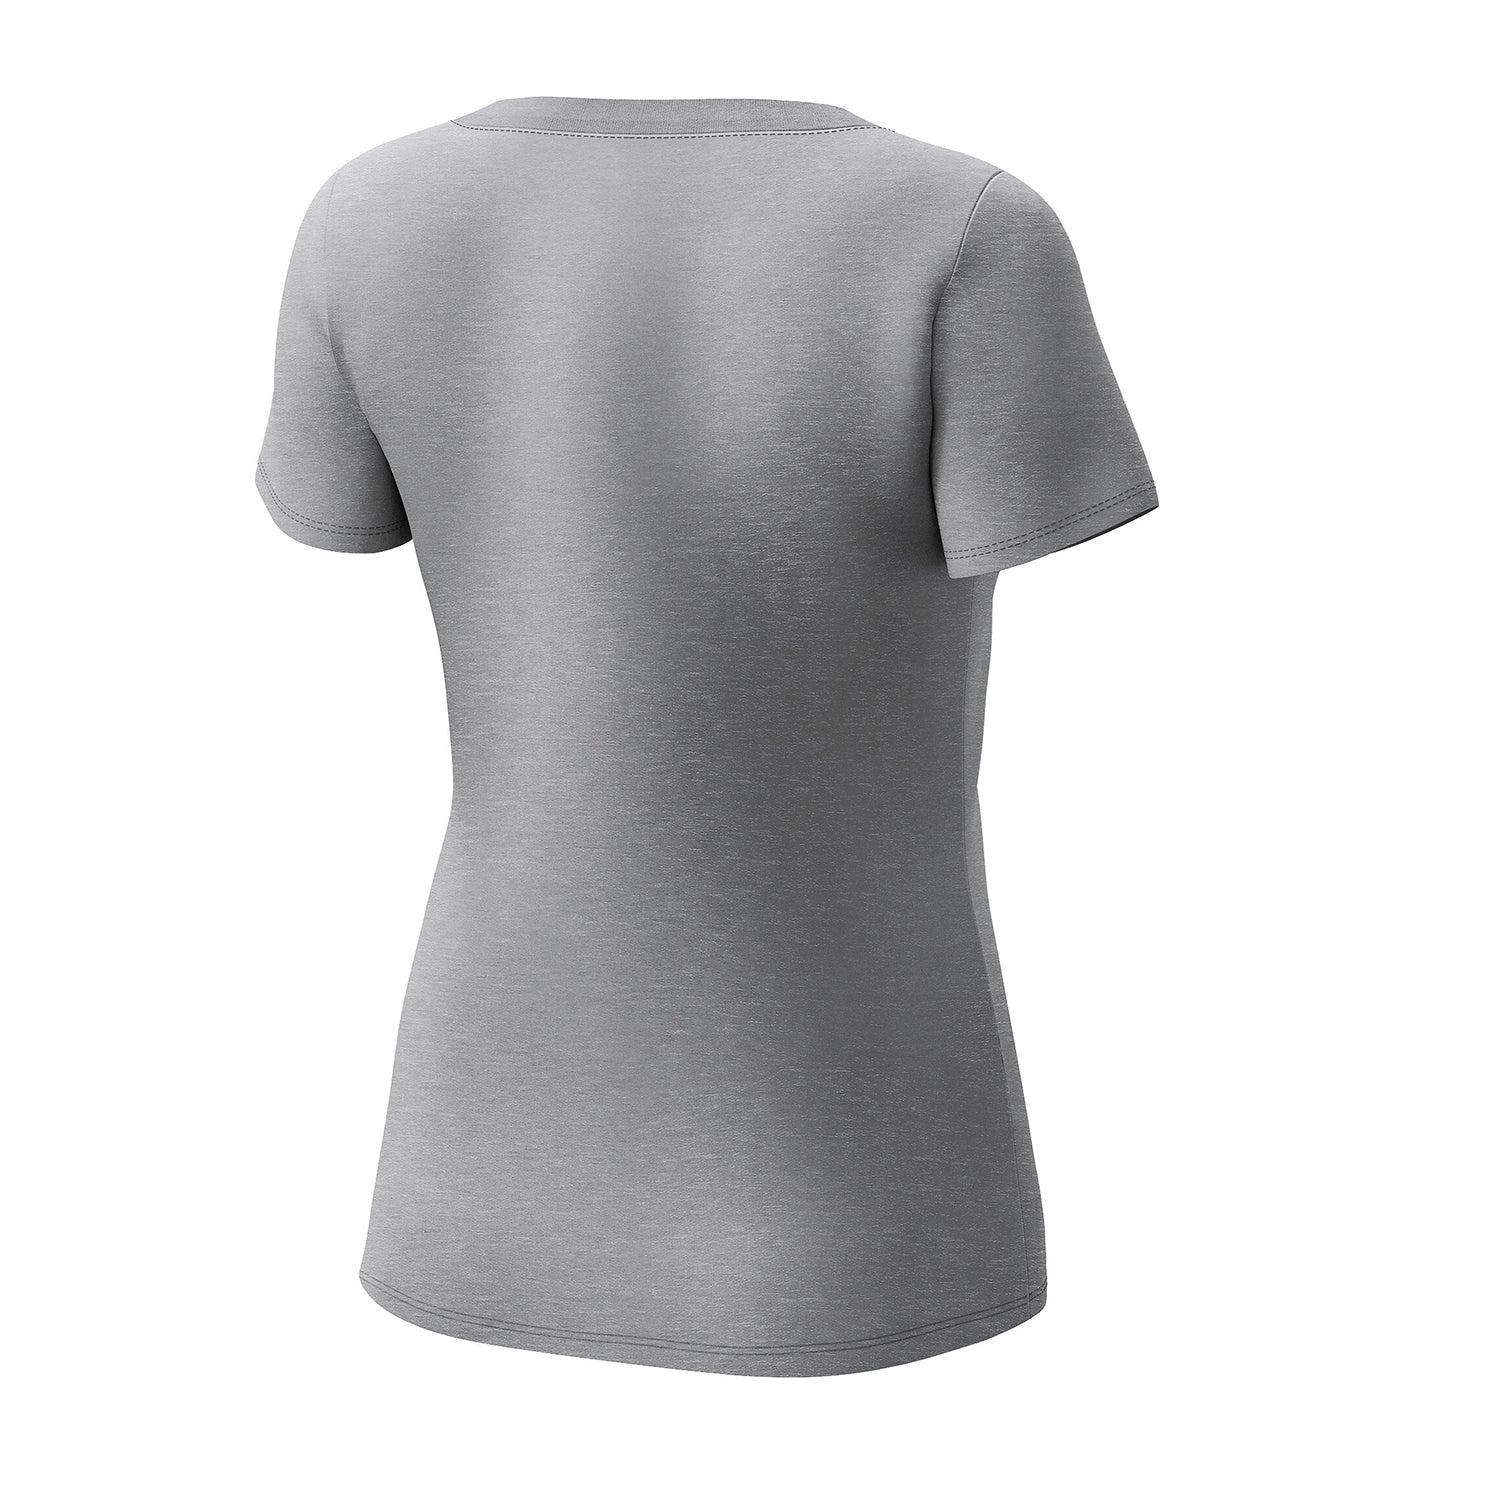 Overwatch Logo Women's Grey T-Shirt - Back View